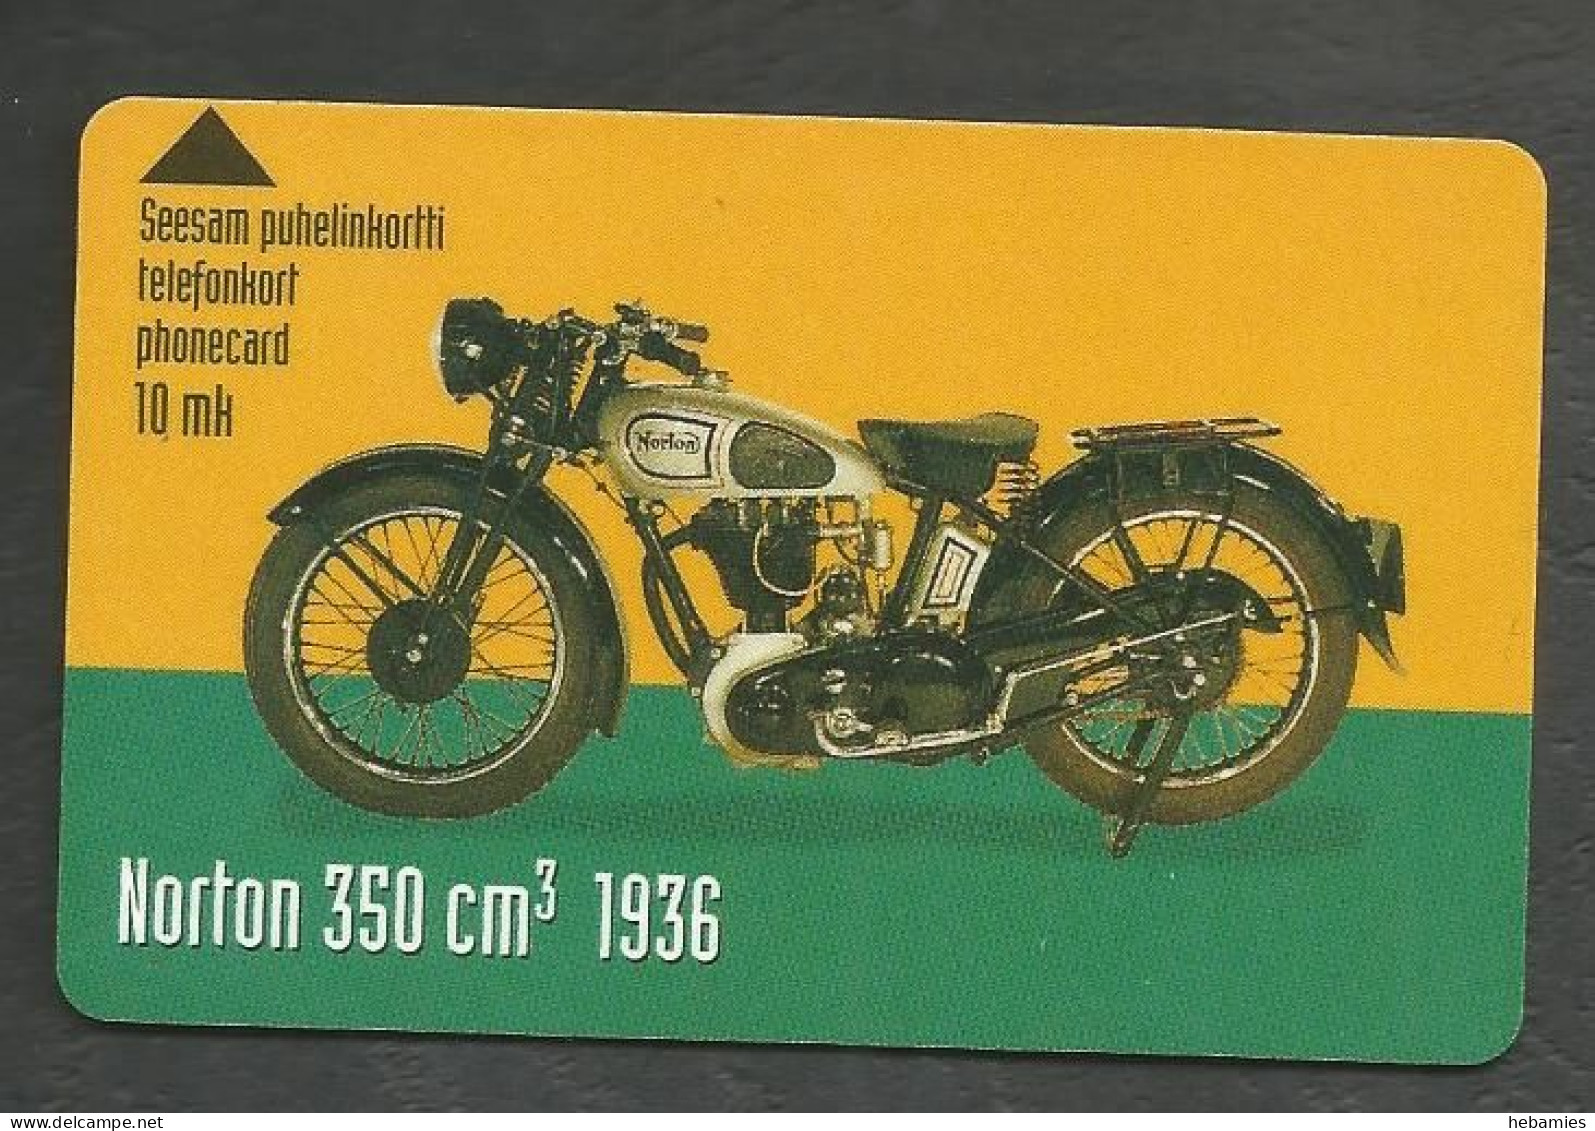 NORTON 350 Cm3 1936 - Magnetic Card -  10 FIM  FINNET - FINLAND - - Motorbikes